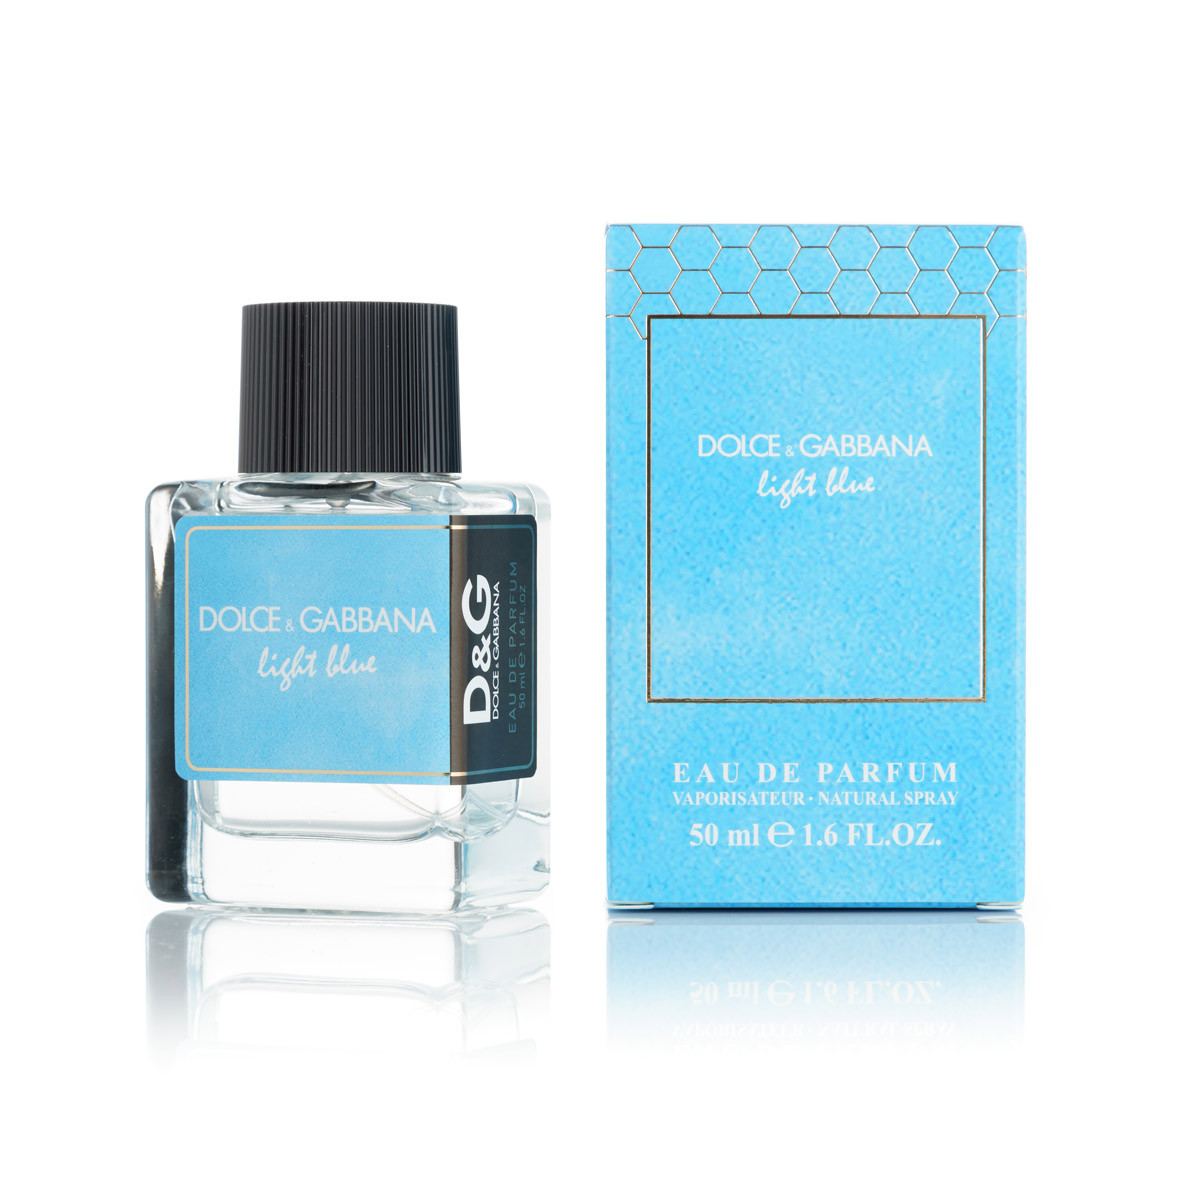 Жіночий міні парфуму Dolce&Gabbana Light Blue - 50 мл (код: 420)